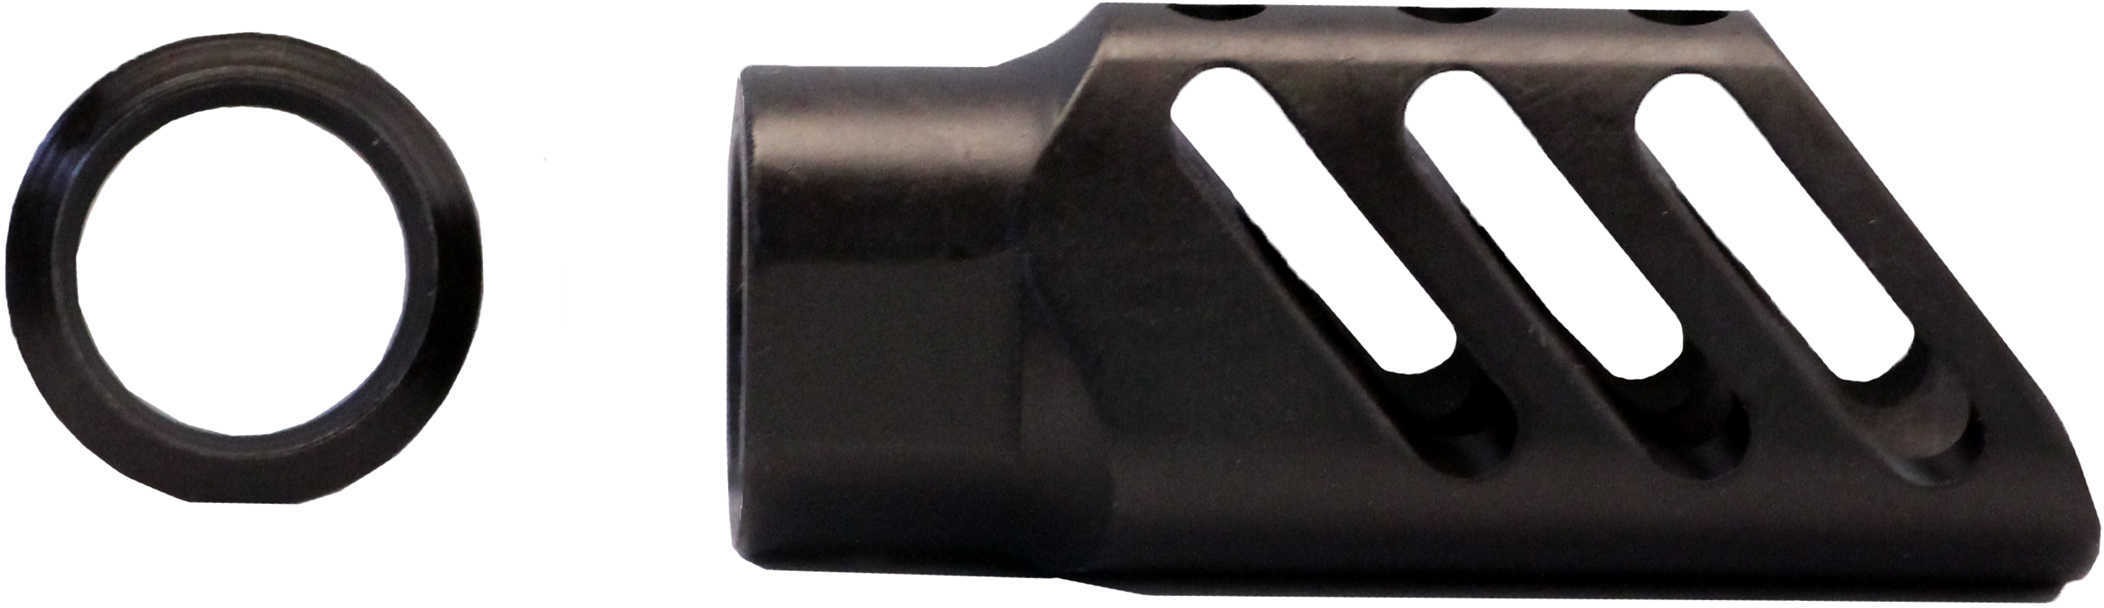 Diamondhead 5.56mm T-Flash Flash Hider Md: 3215